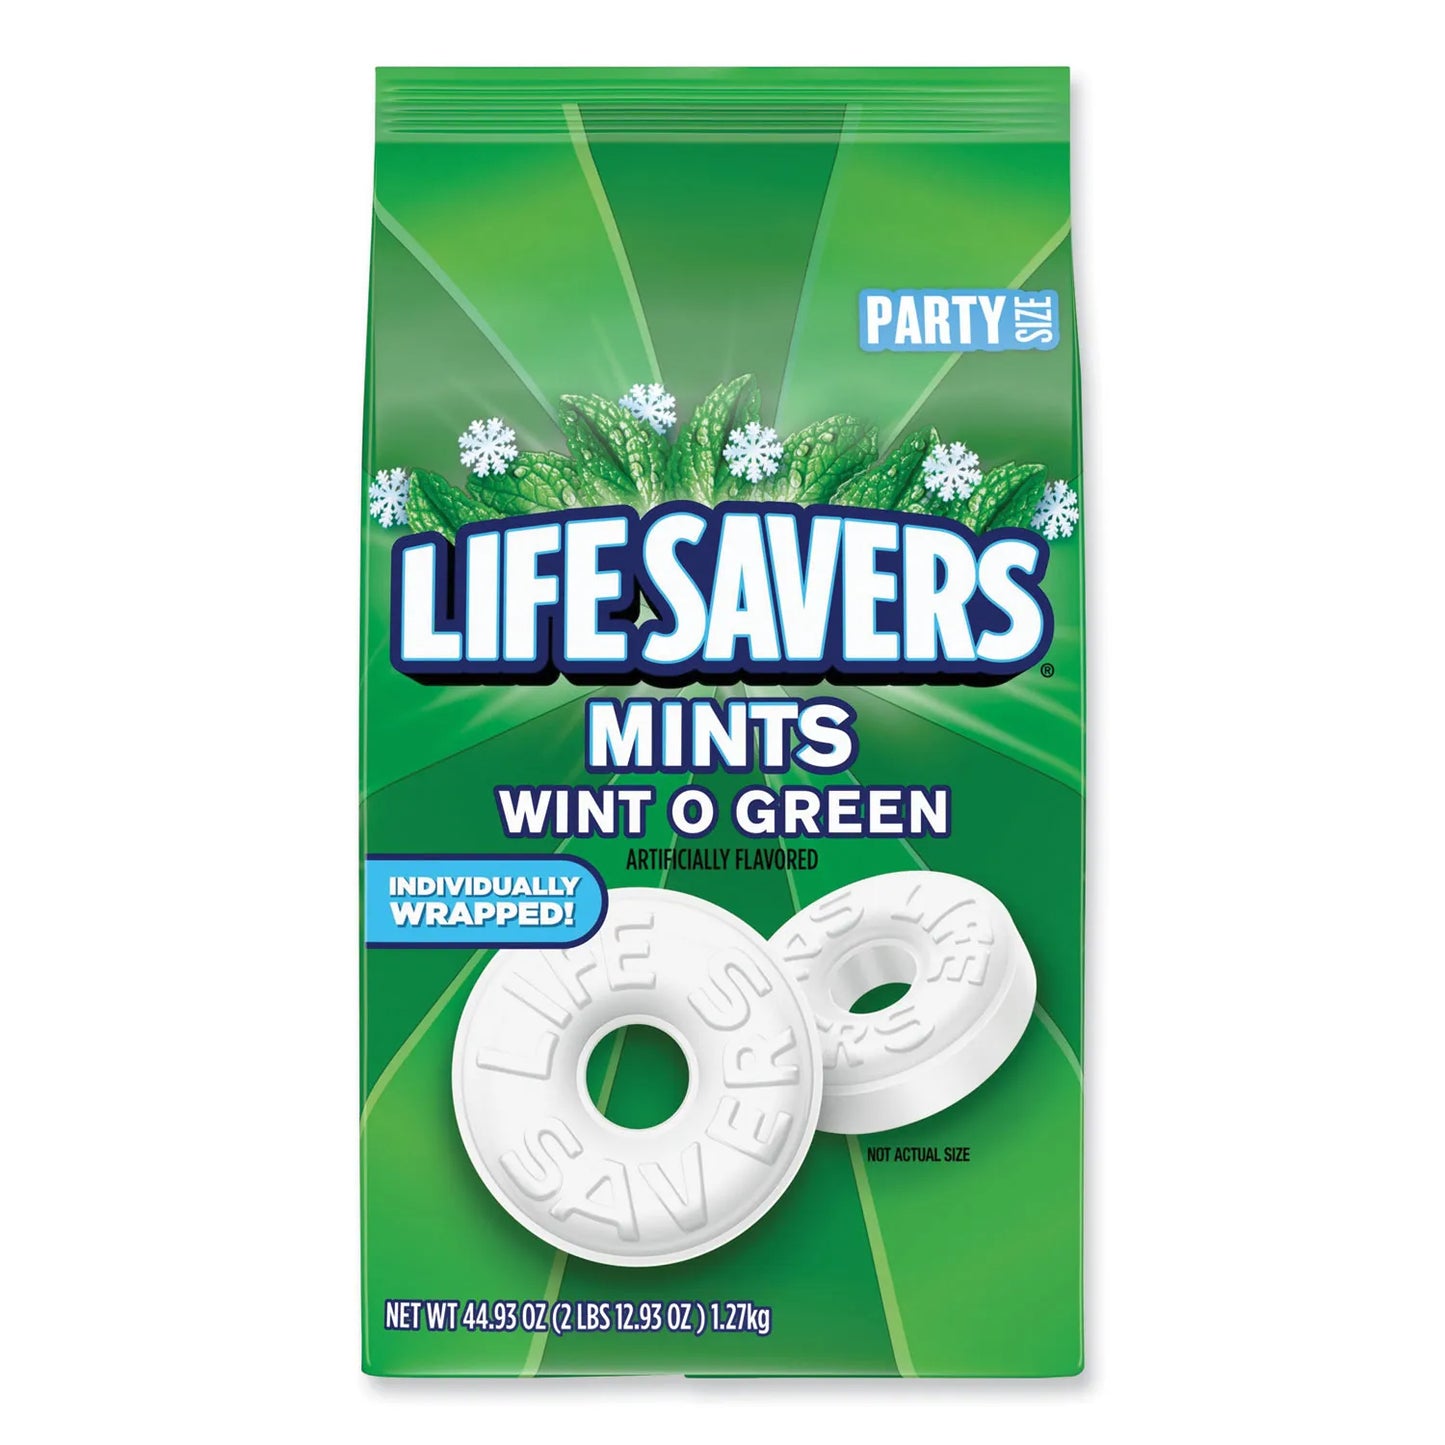 LifeSavers Hard Candy Mints, Wint-O-Green, 44.93 oz Bag, Party Size LFS21524